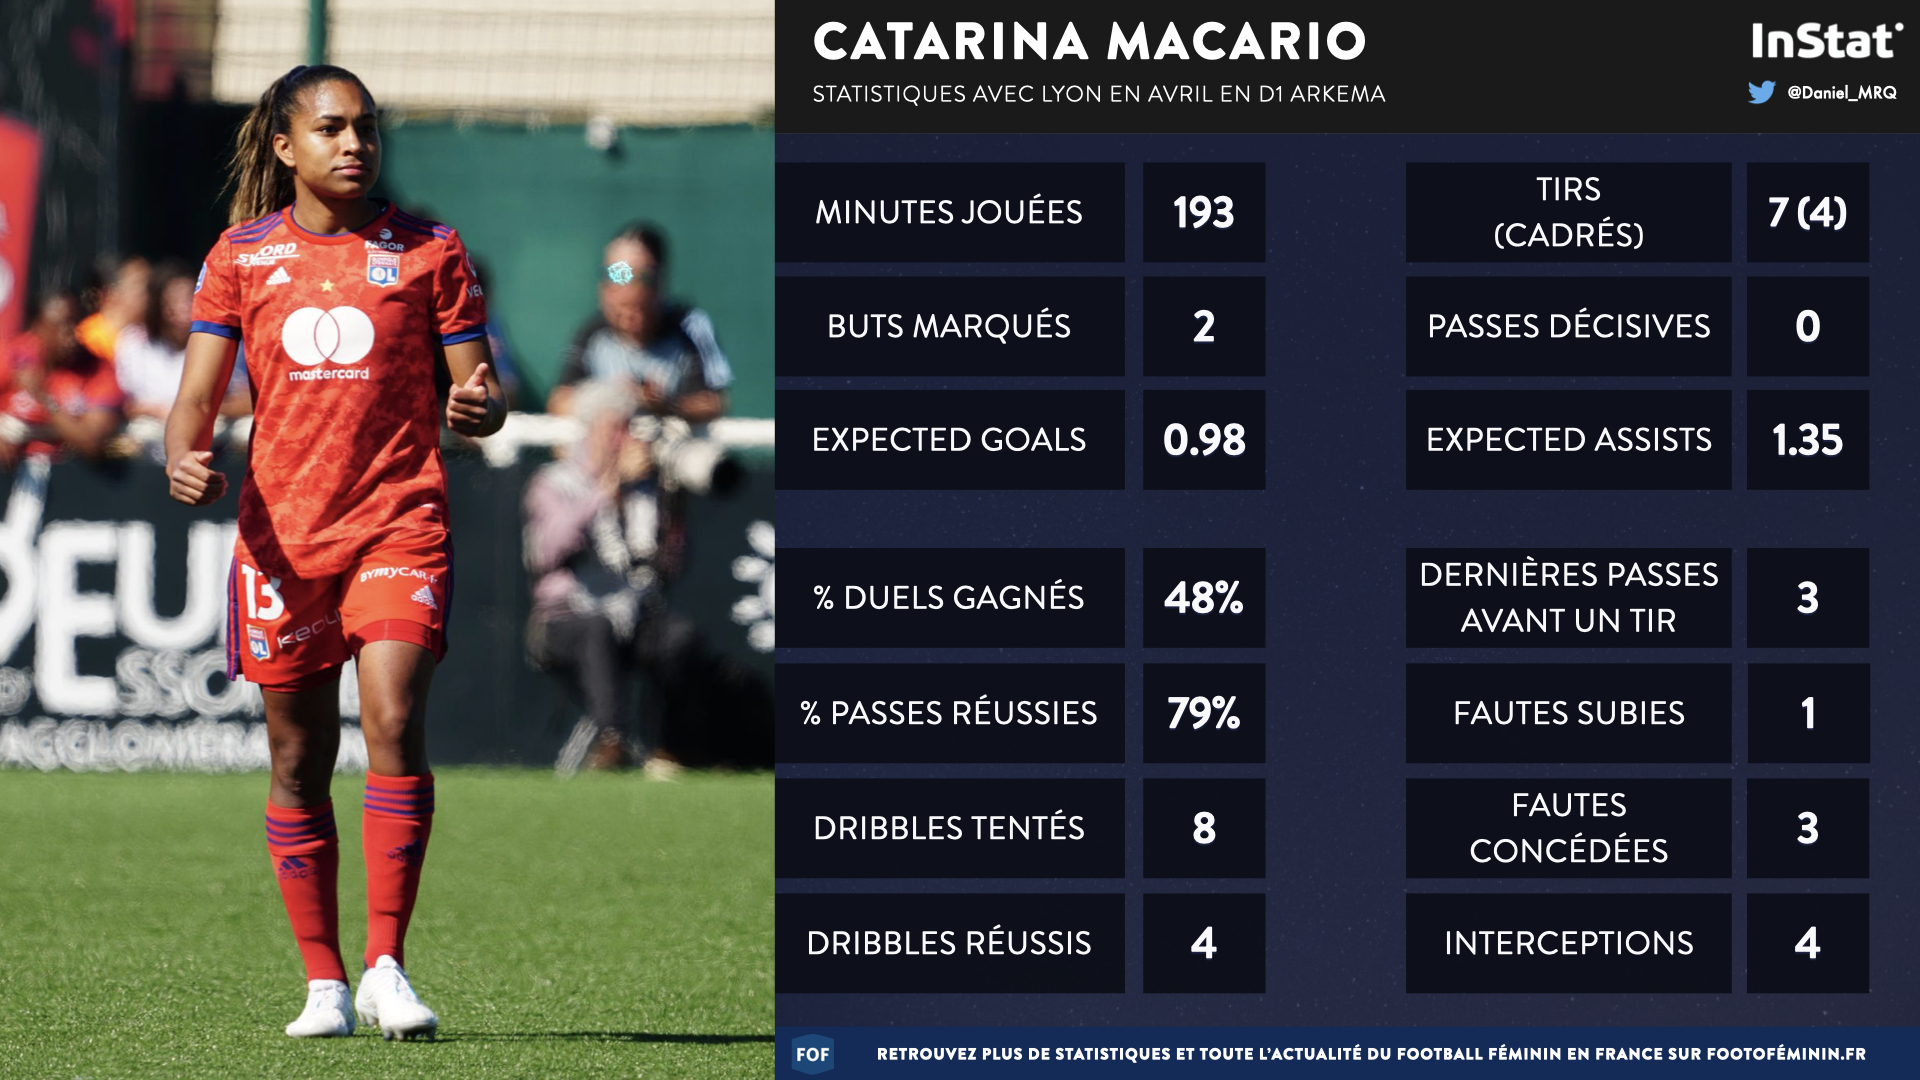 #D1Arkema - Catarina MACARIO, joueuse du mois d'avril